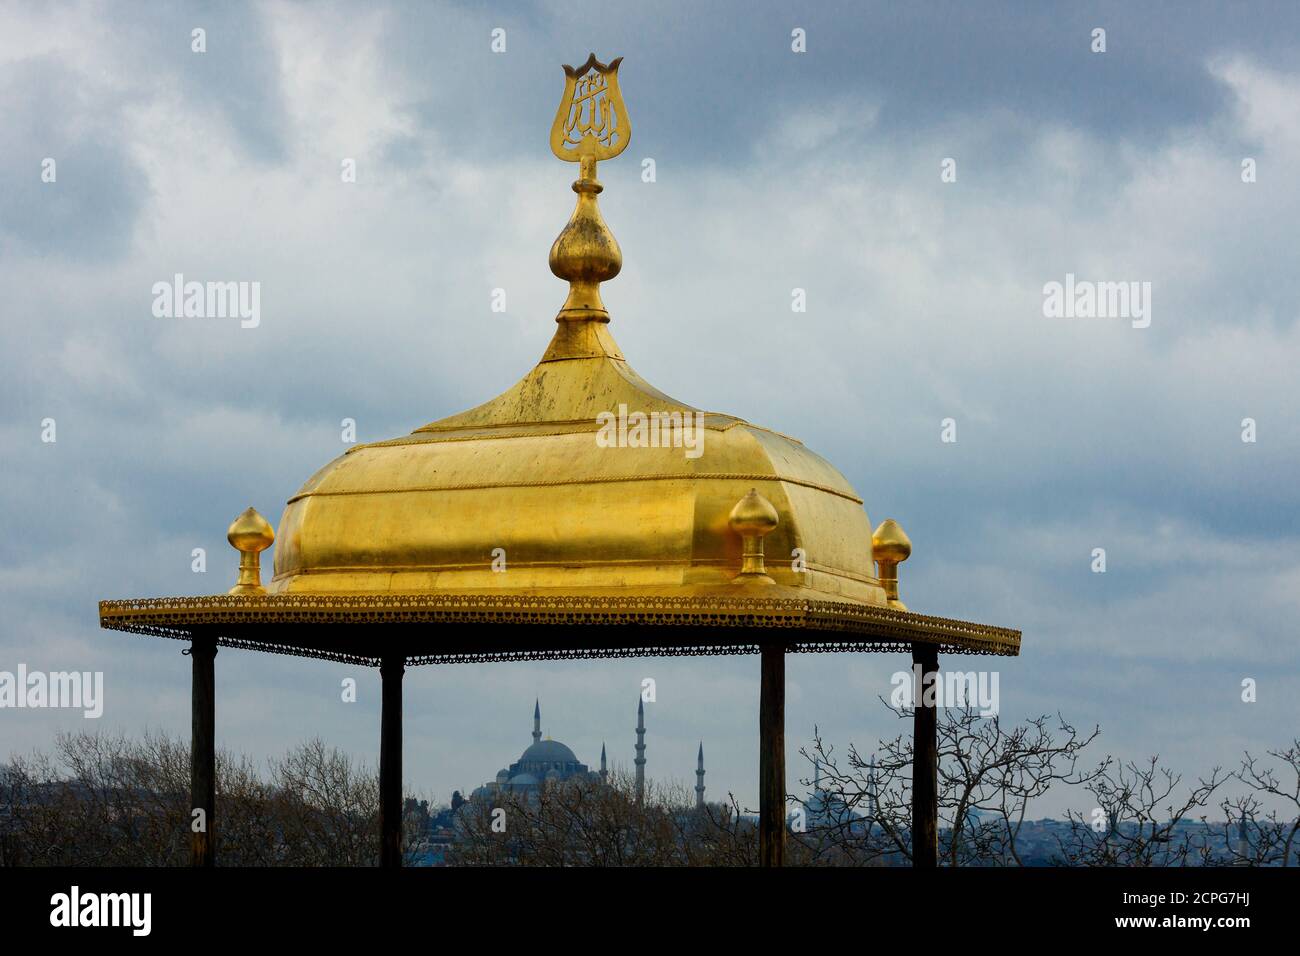 Turchia, Istanbul, Palazzo Topkapi, baldacchino dorato Foto Stock